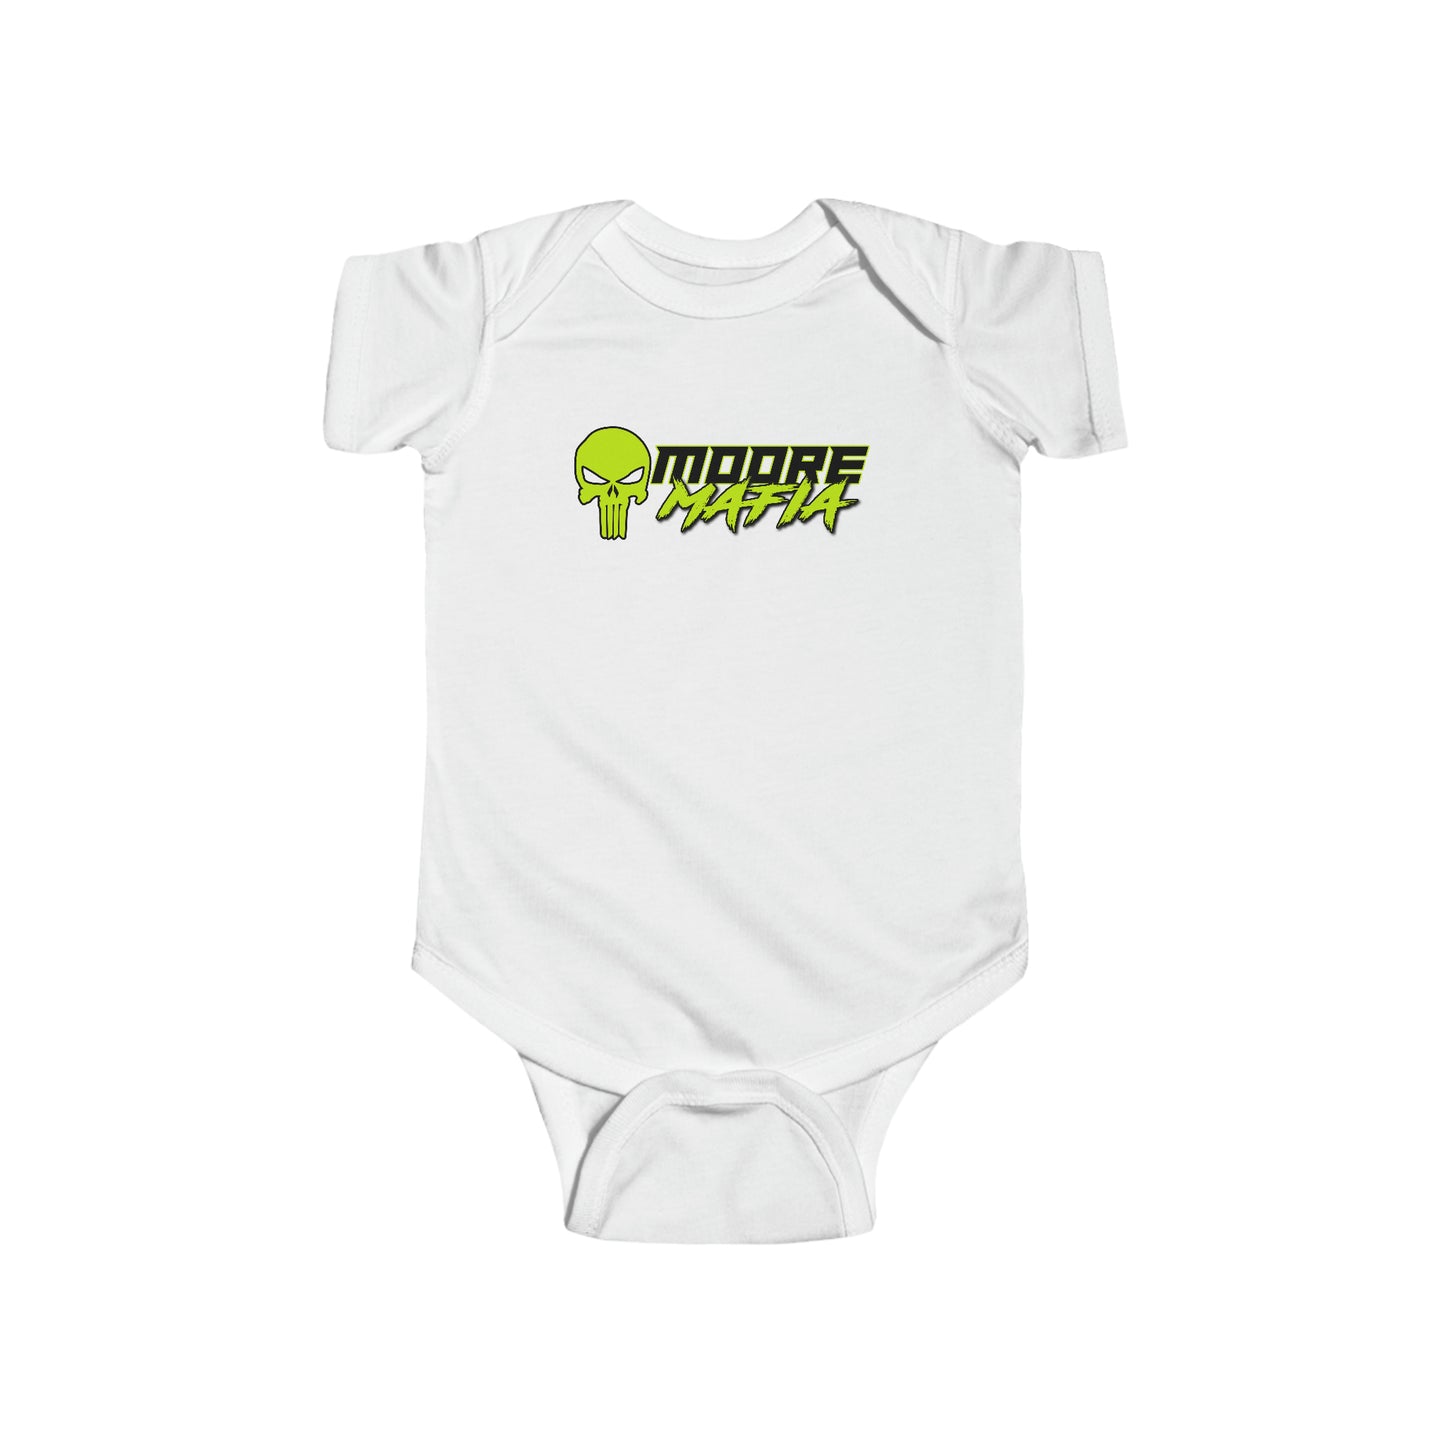 Moore Mafia Infant Bodysuit